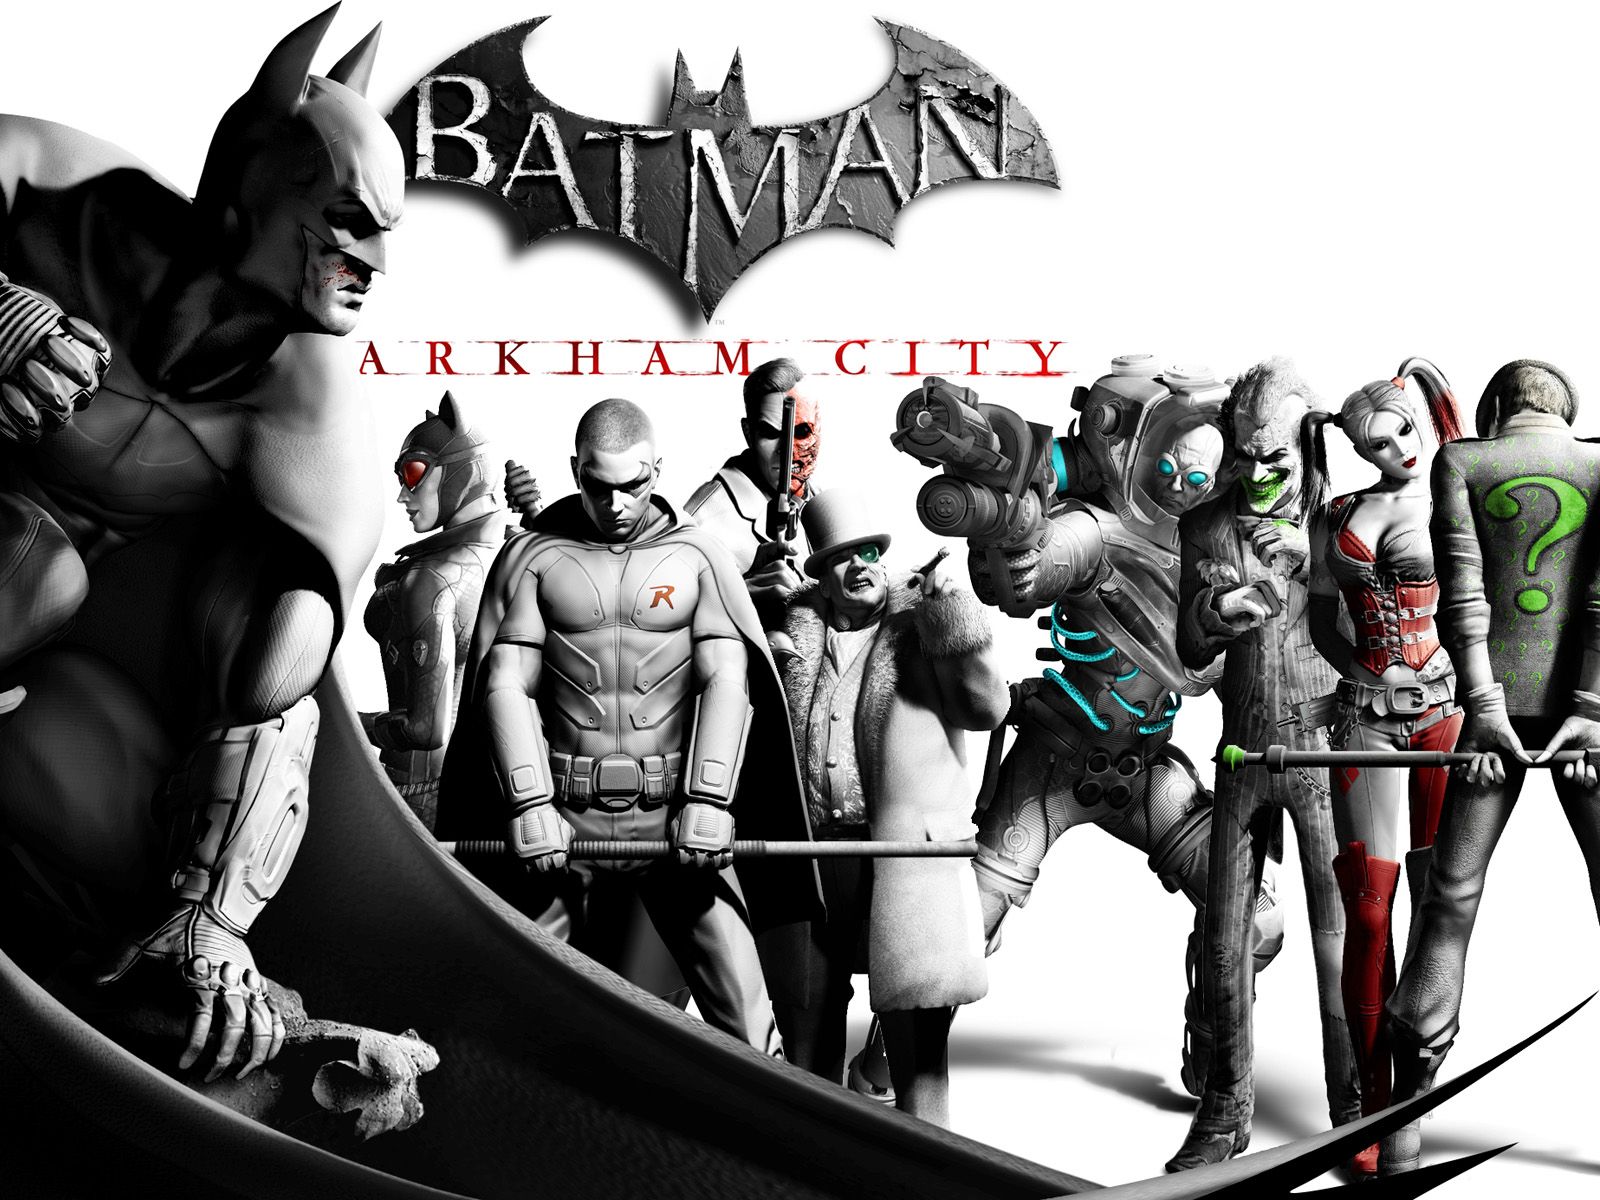 Batman: Arkham City Game Characters wallpaper. Arkham city, Batman arkham city, Batman